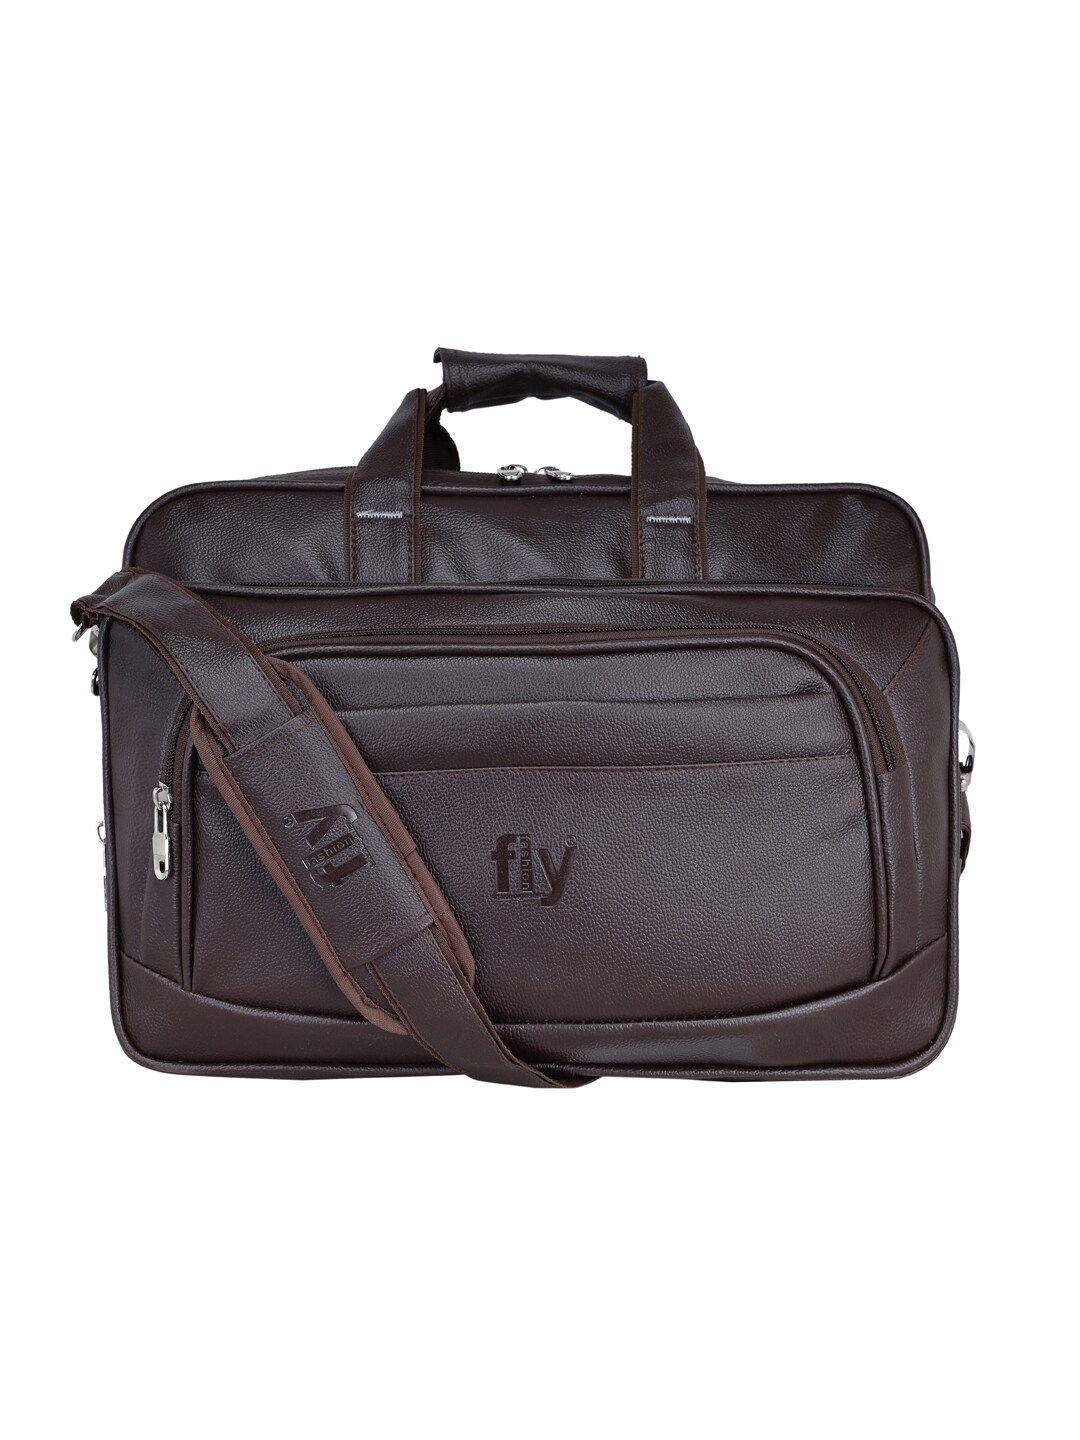 fly fashion unisex brown pu laptop bag